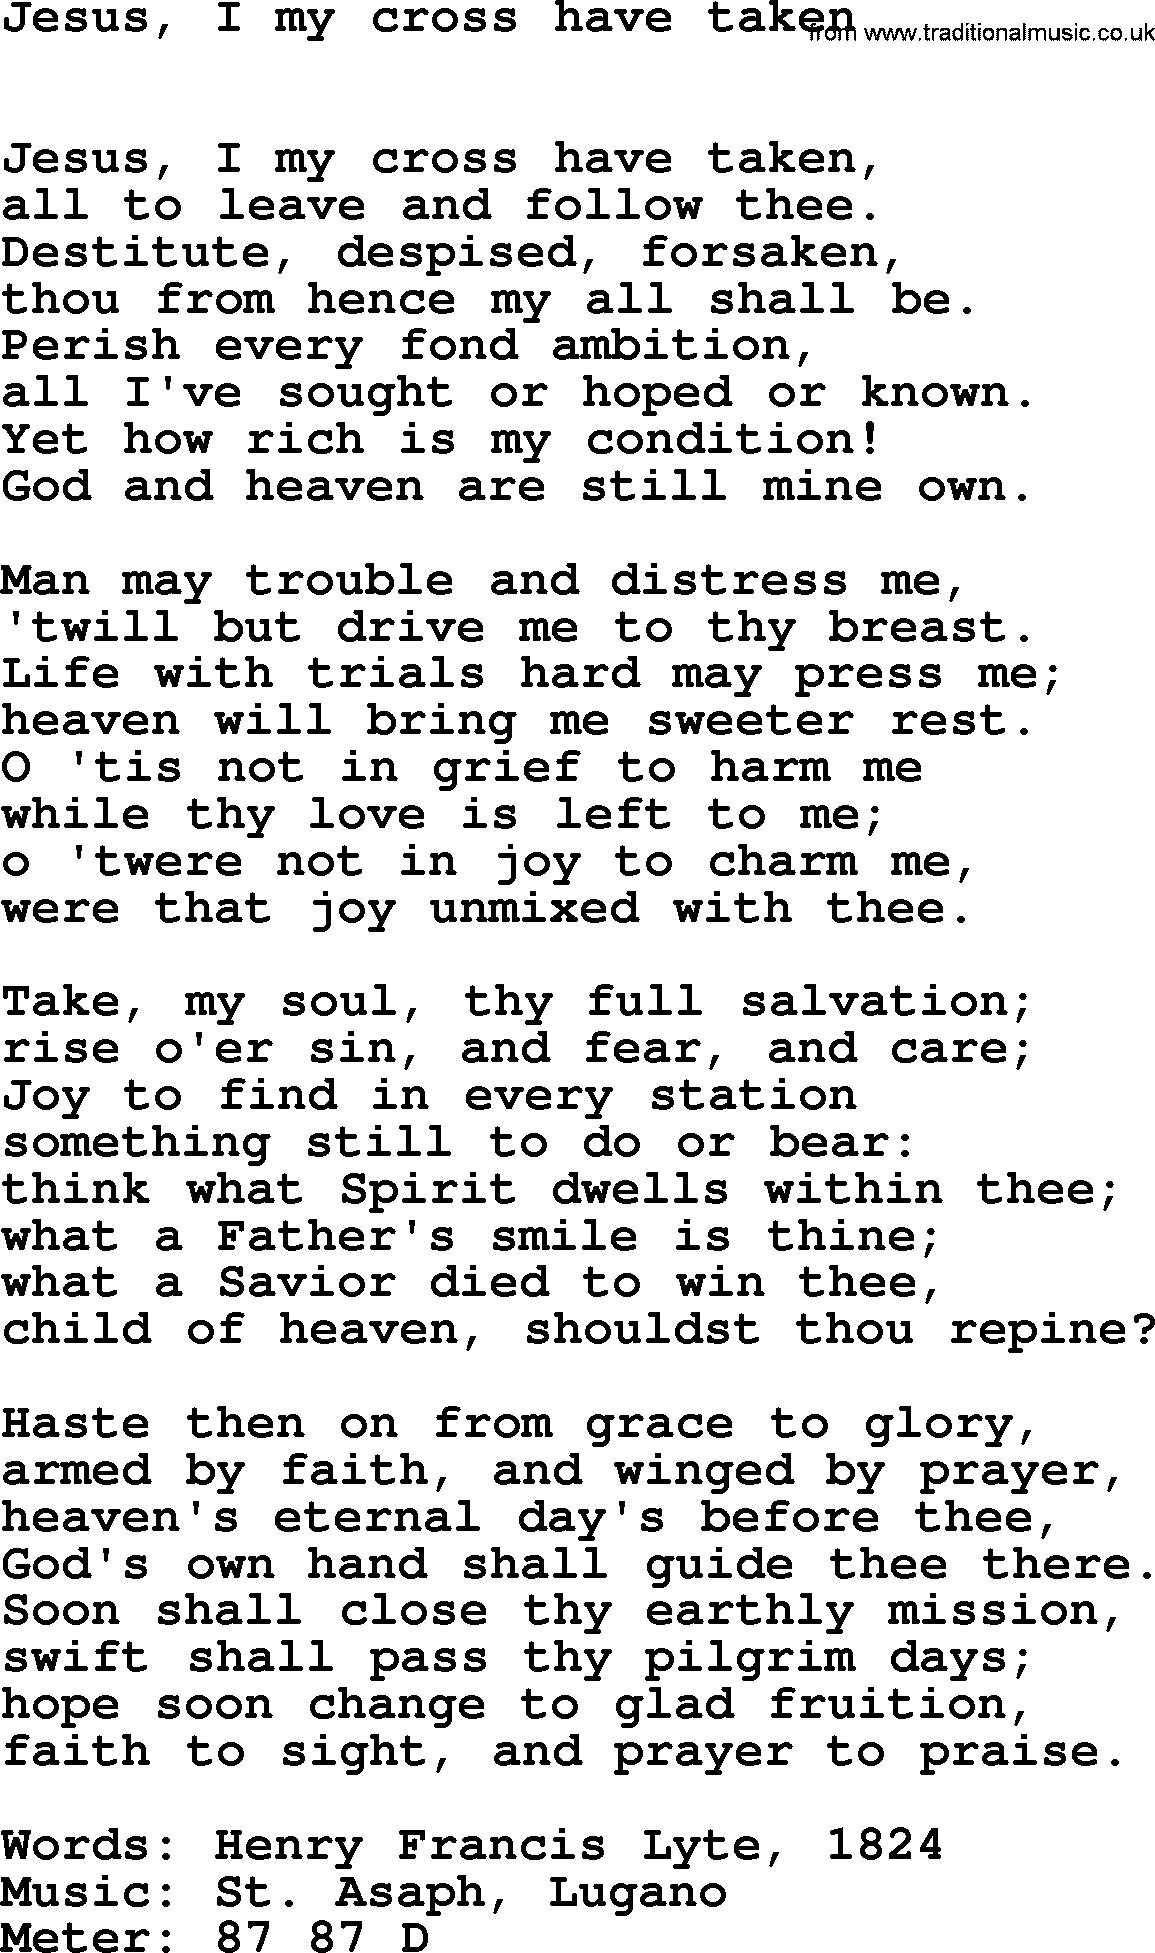 Book of Common Praise Hymn: Jesus, I My Cross Have Taken.txt lyrics with midi music